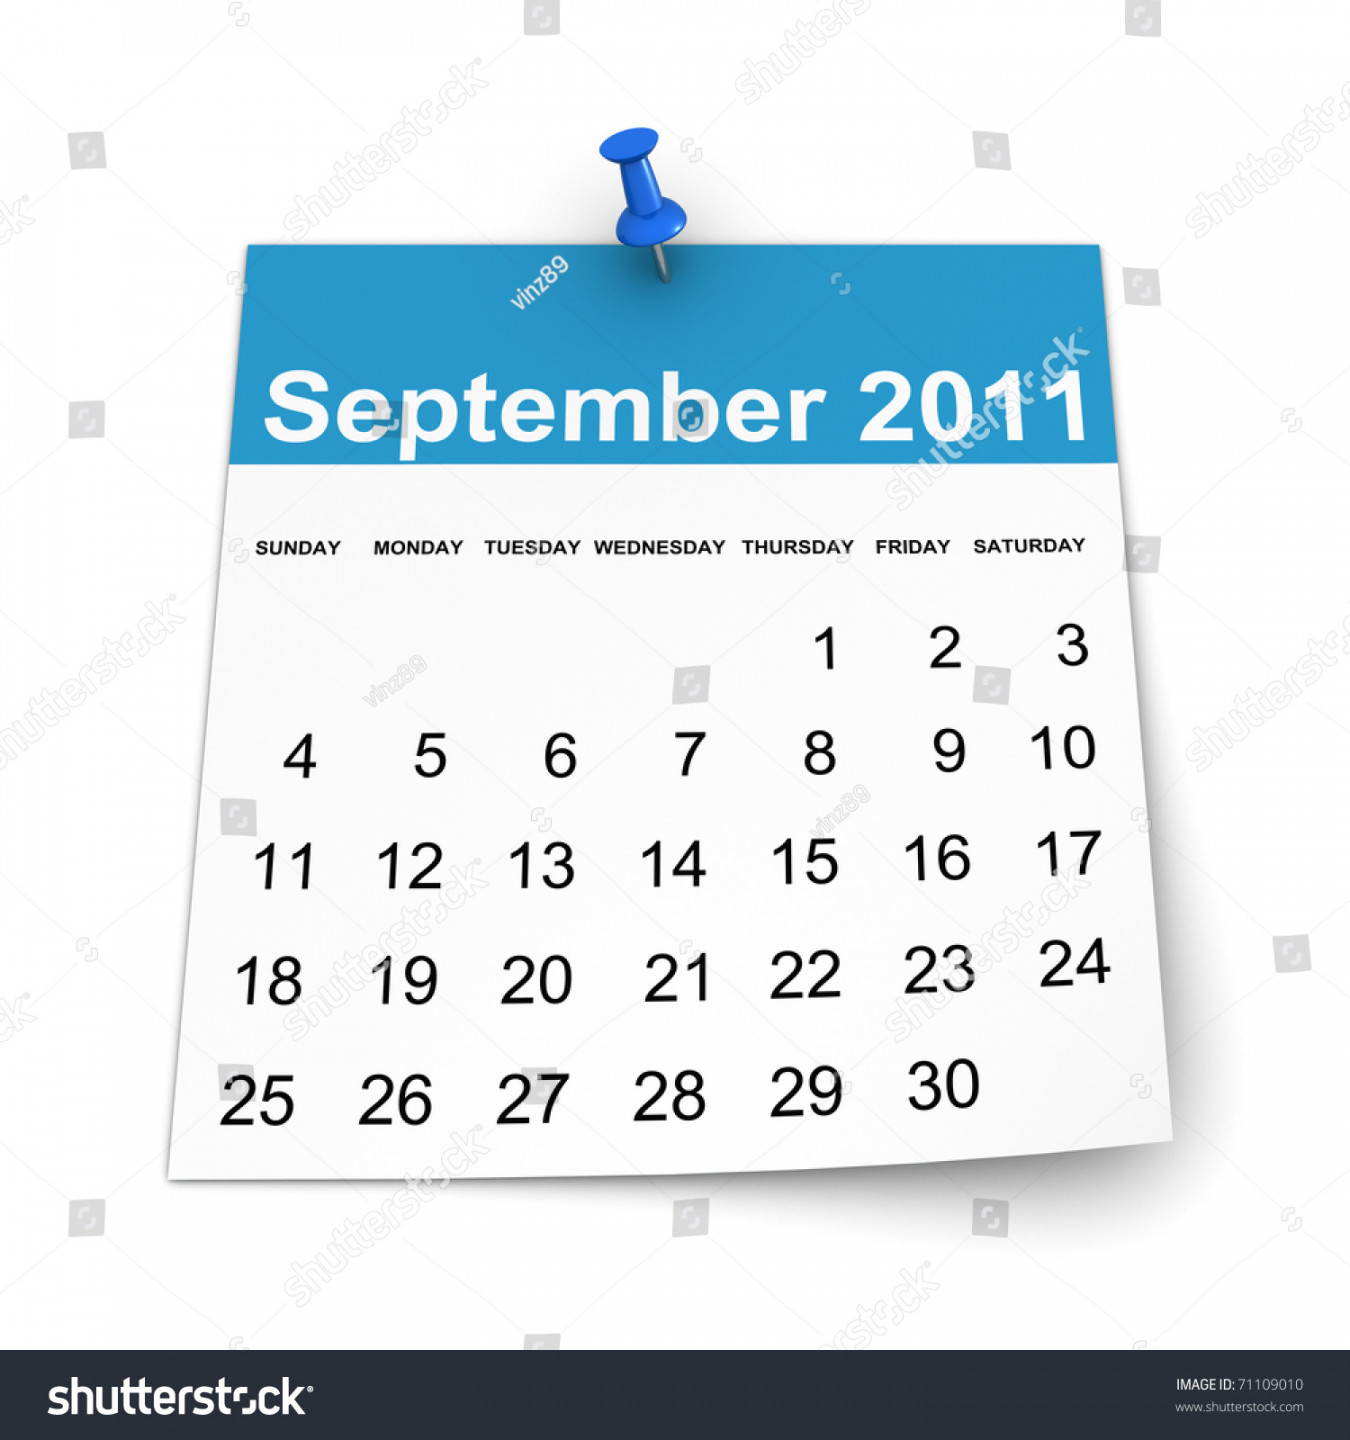 , September 20 Calendar Images, Stock Photos, D objects